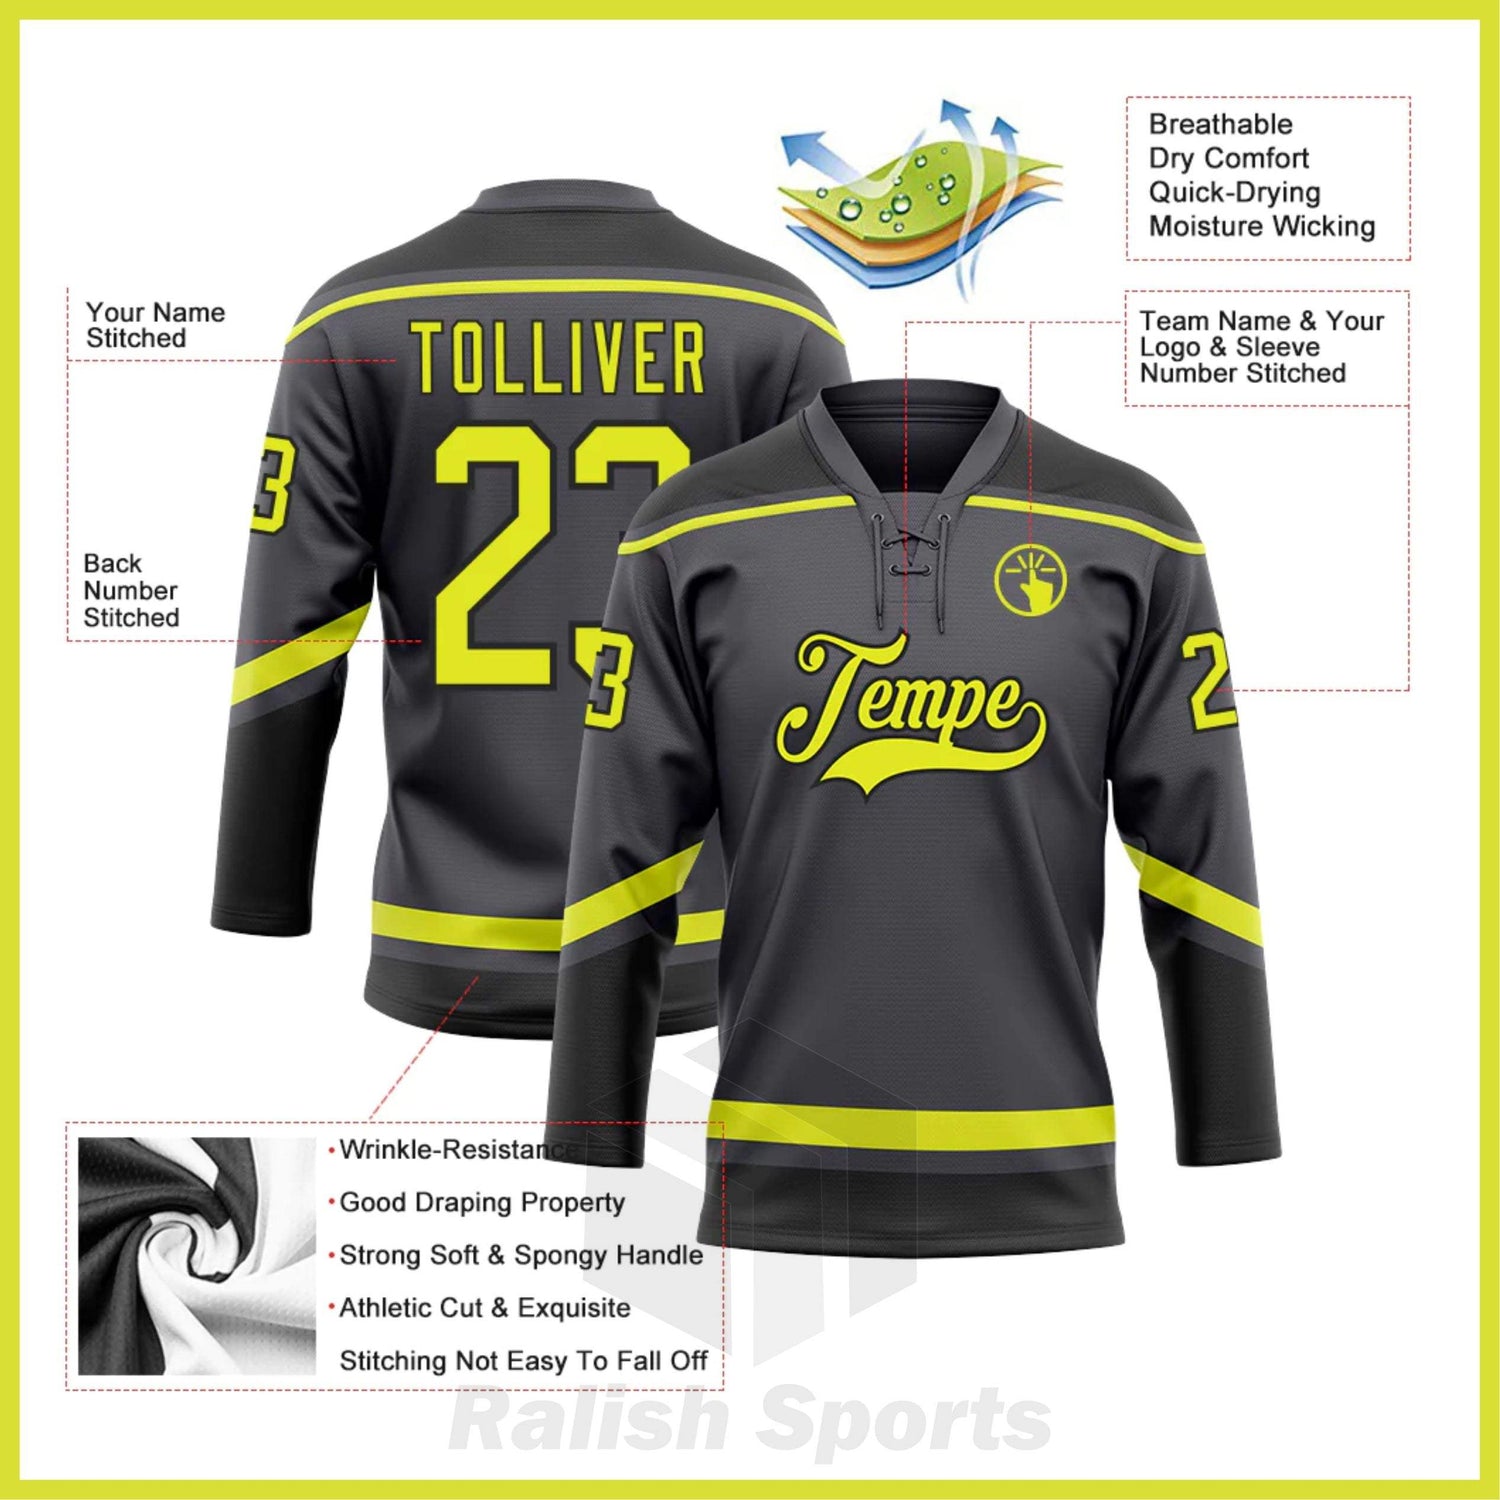 Custom Steel Gray Neon Yellow-Black Hockey Lace Neck Jersey - Ralish Sports